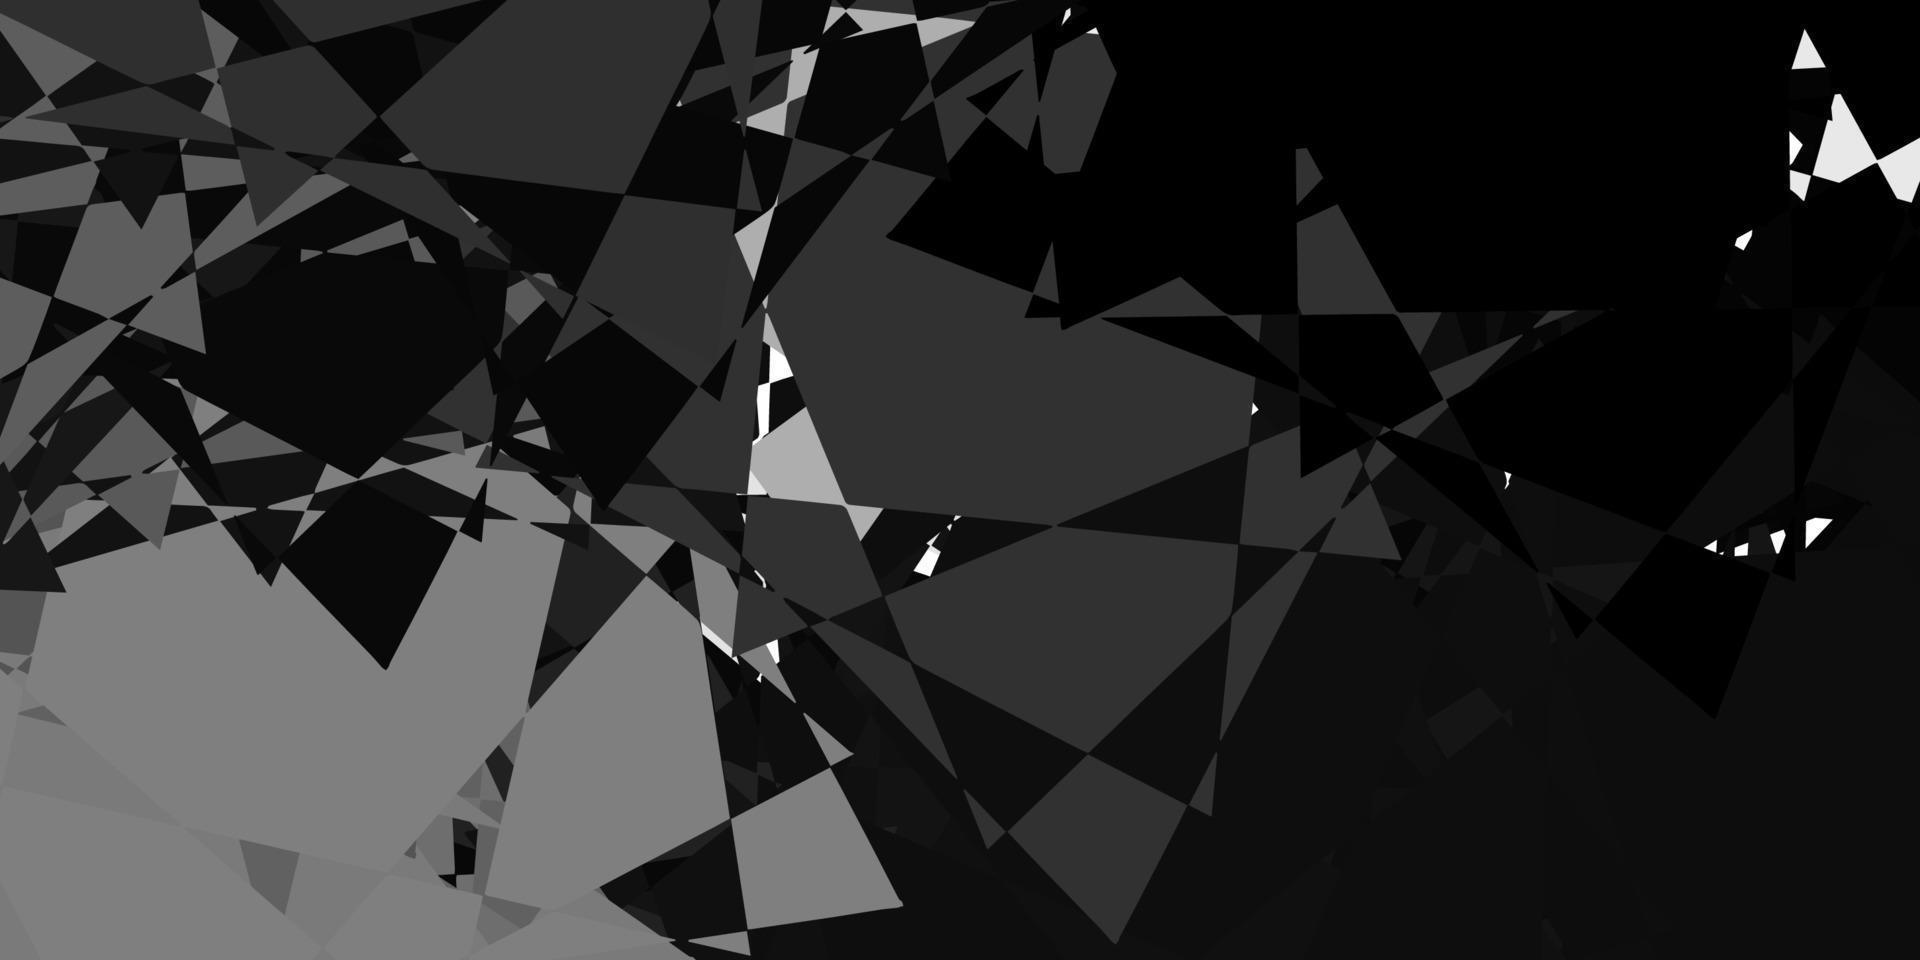 diseño vectorial gris oscuro con formas triangulares. vector